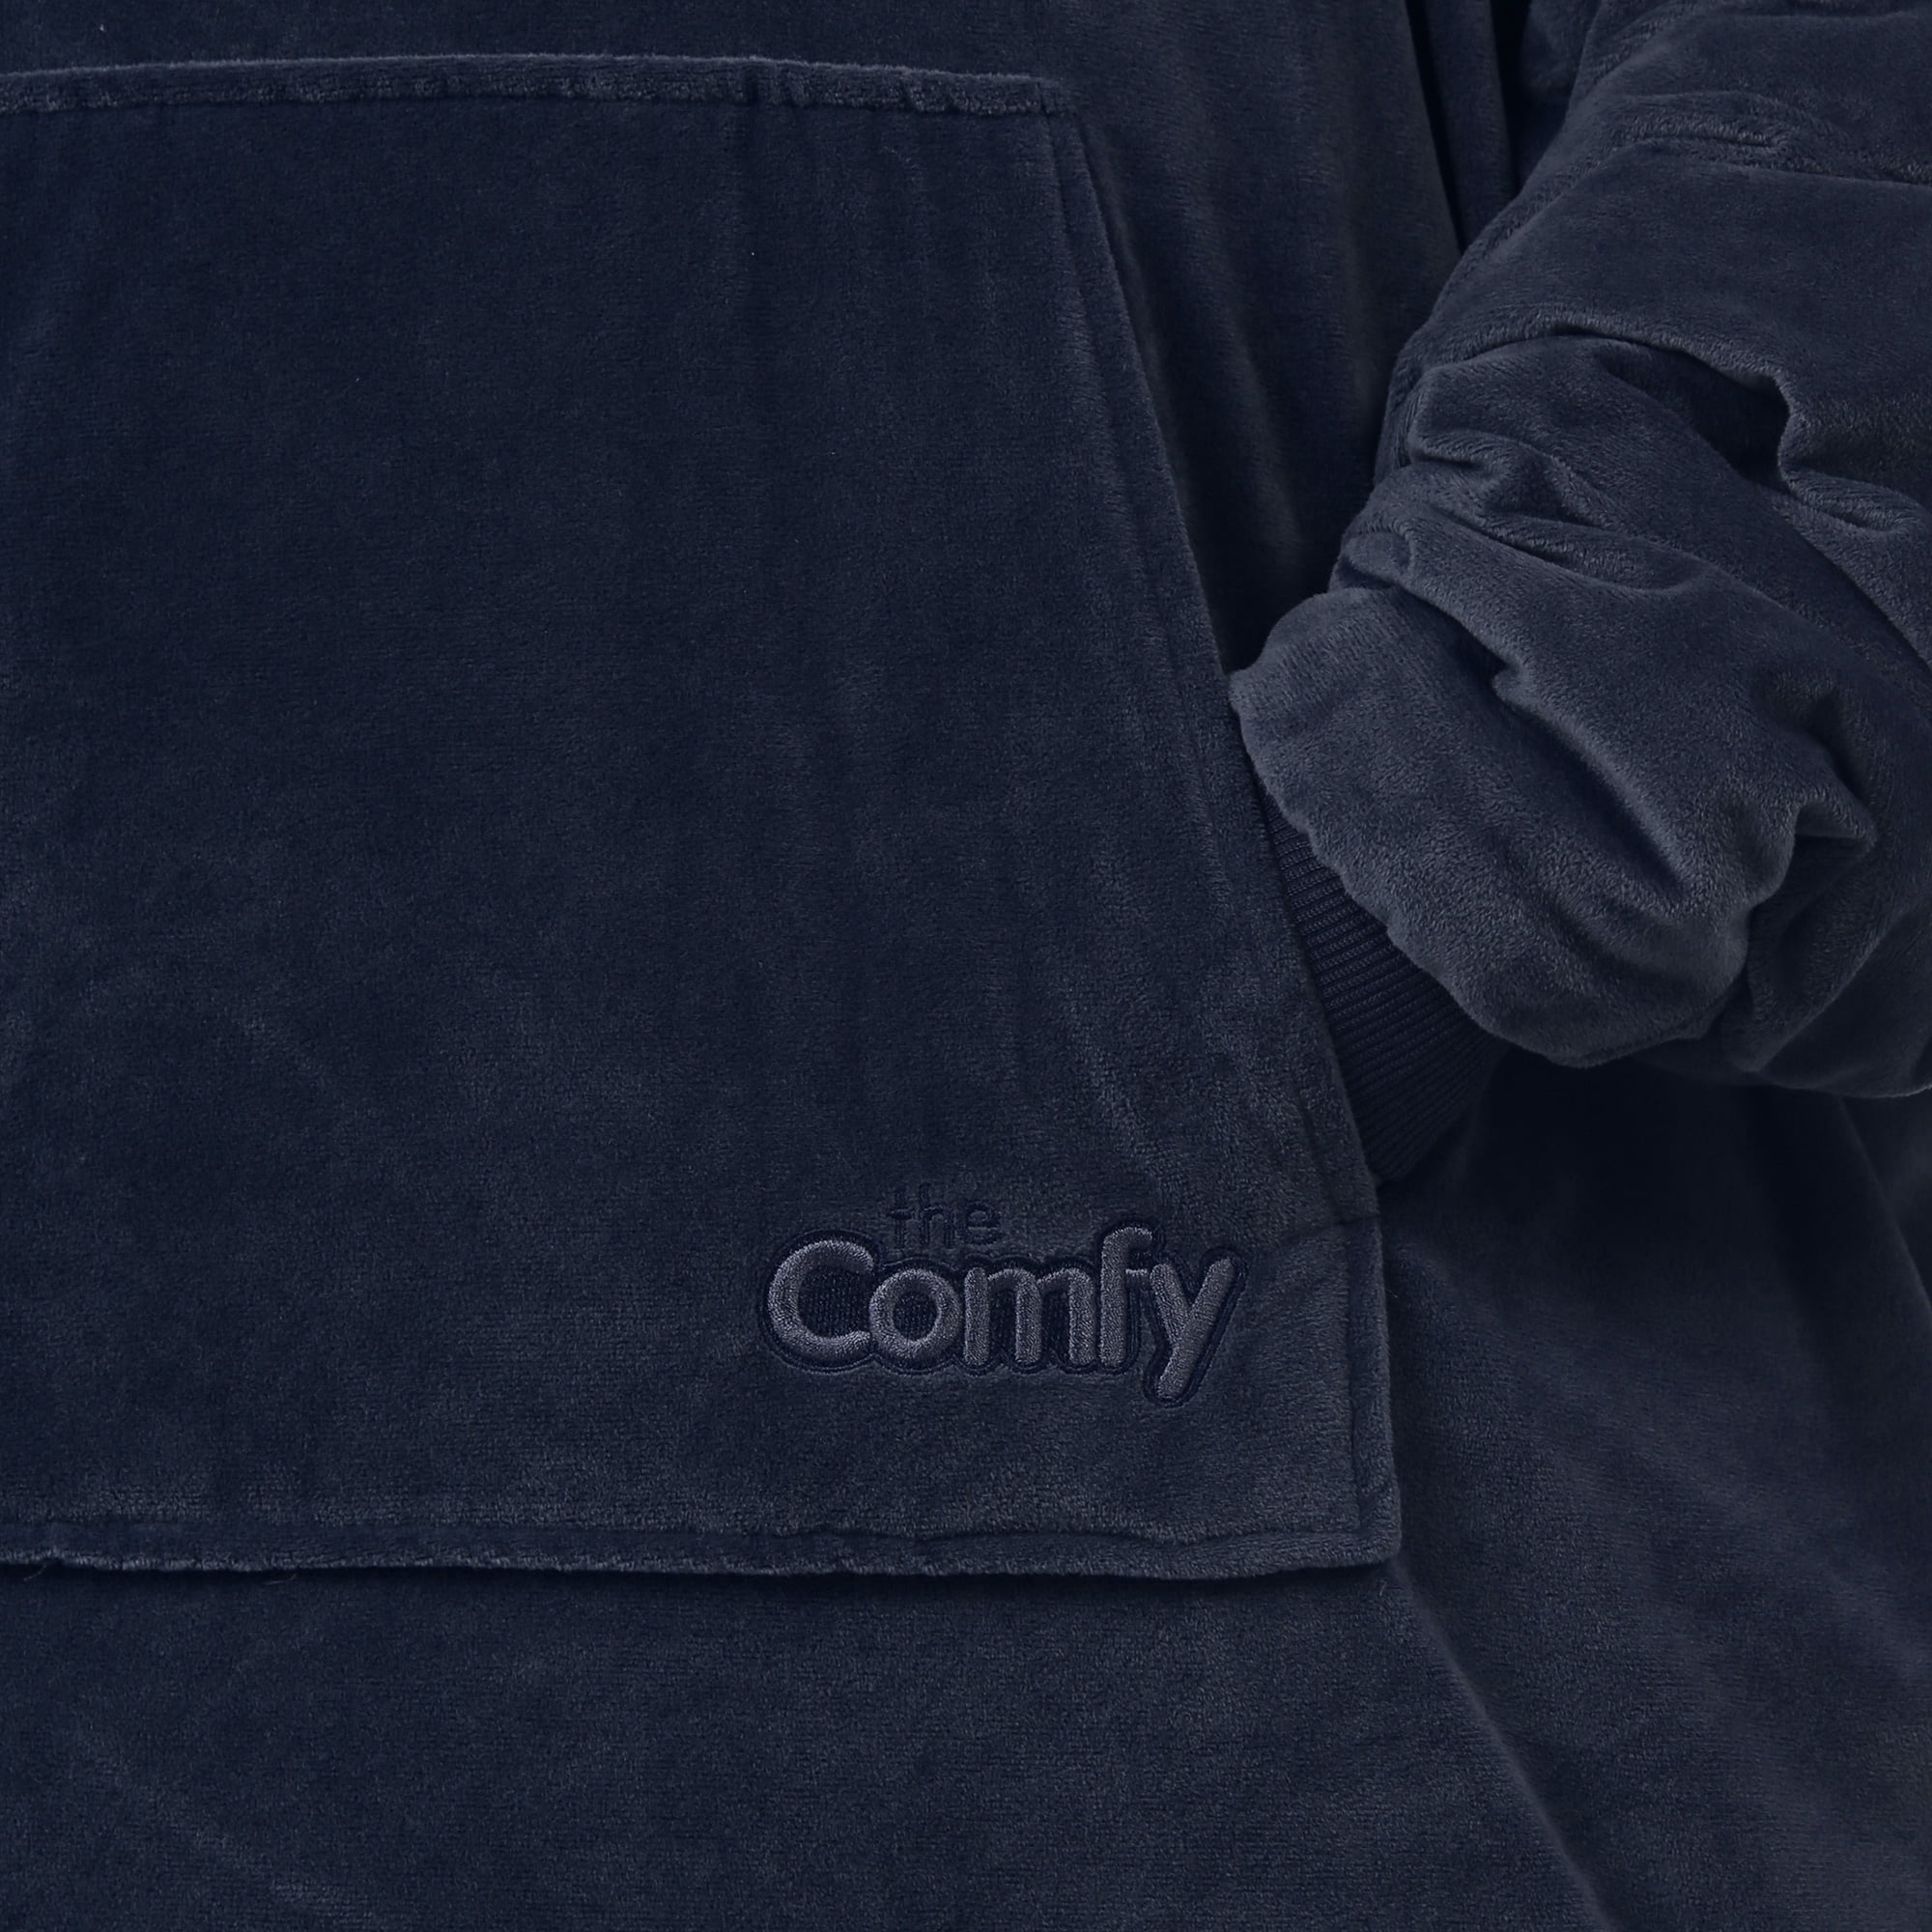 The Comfy Blanket Sweatshirt - Blue, 1 ct - Kroger